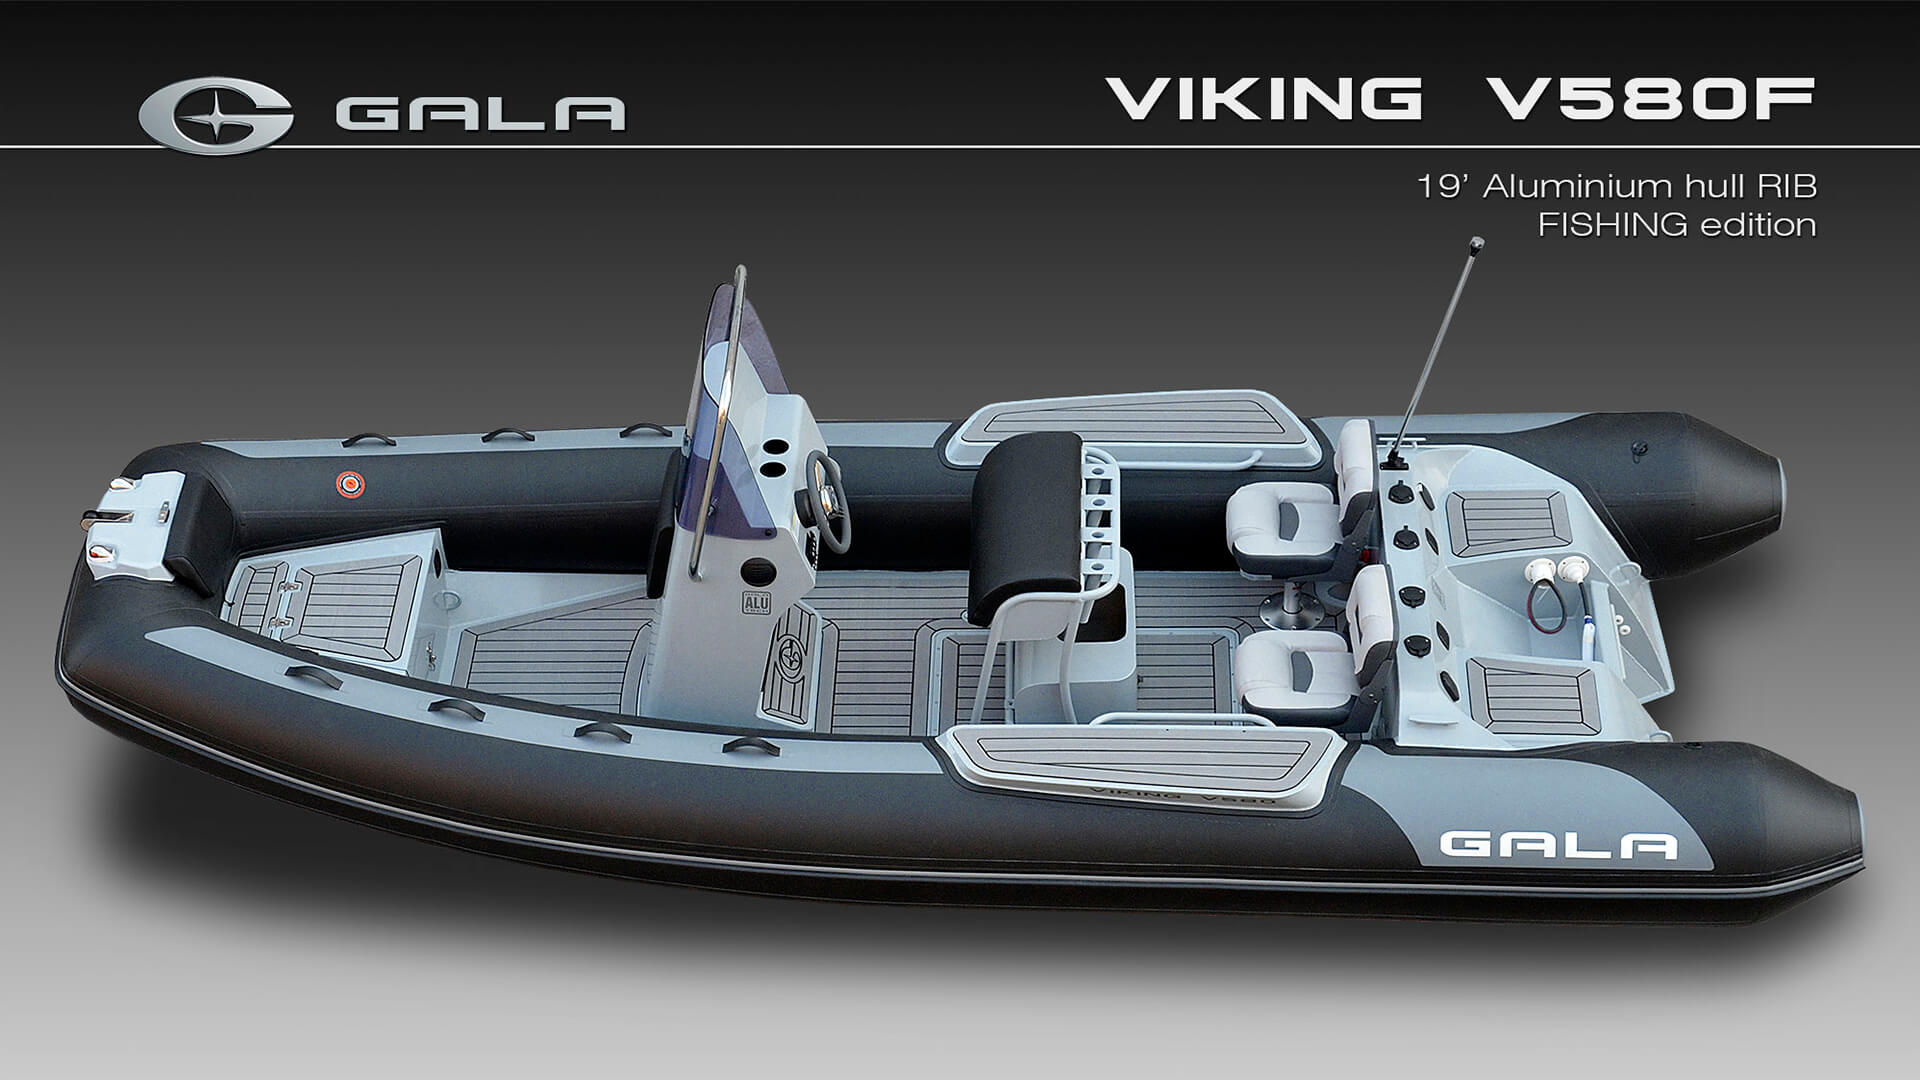 Надувная лодка с жестким алюминиевым дном GALA Viking V580F, Надувная лодка с жестким дном GALA Viking V580F, Надувная лодка с жестким дном GALA V580F, Надувная лодка GALA V580F, Надувная лодка GALA V580F, GALA V580F, лодка с жестким дном, алюминиевый риб, алюминиевый RIB, RIB